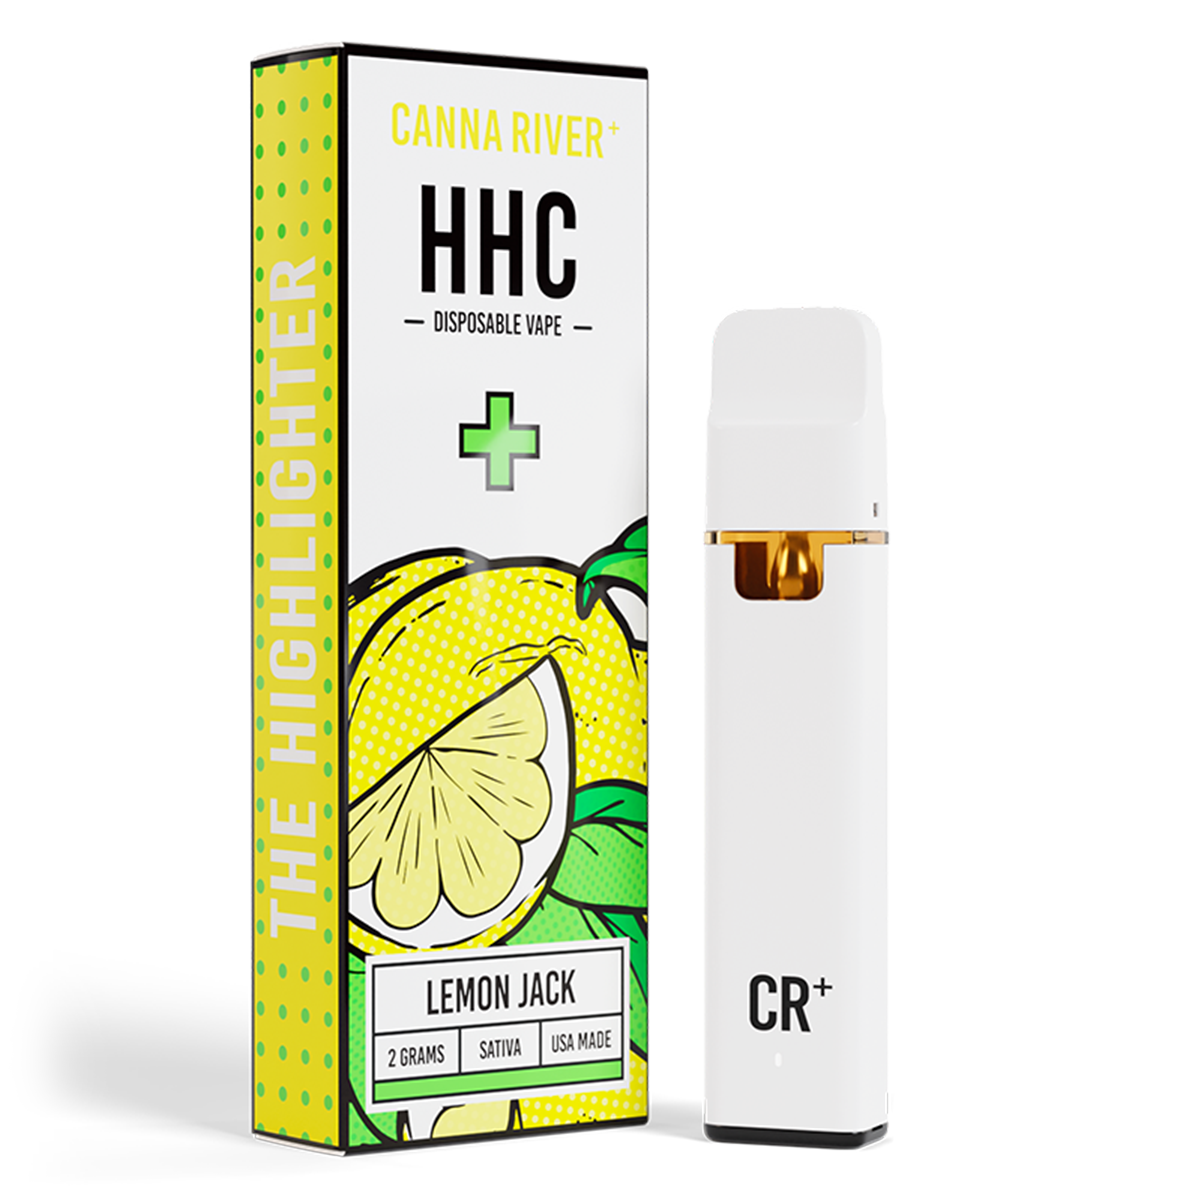 Canna River HHC Disposable Vape Pen Lemon Jack 2g - Dr.Ganja